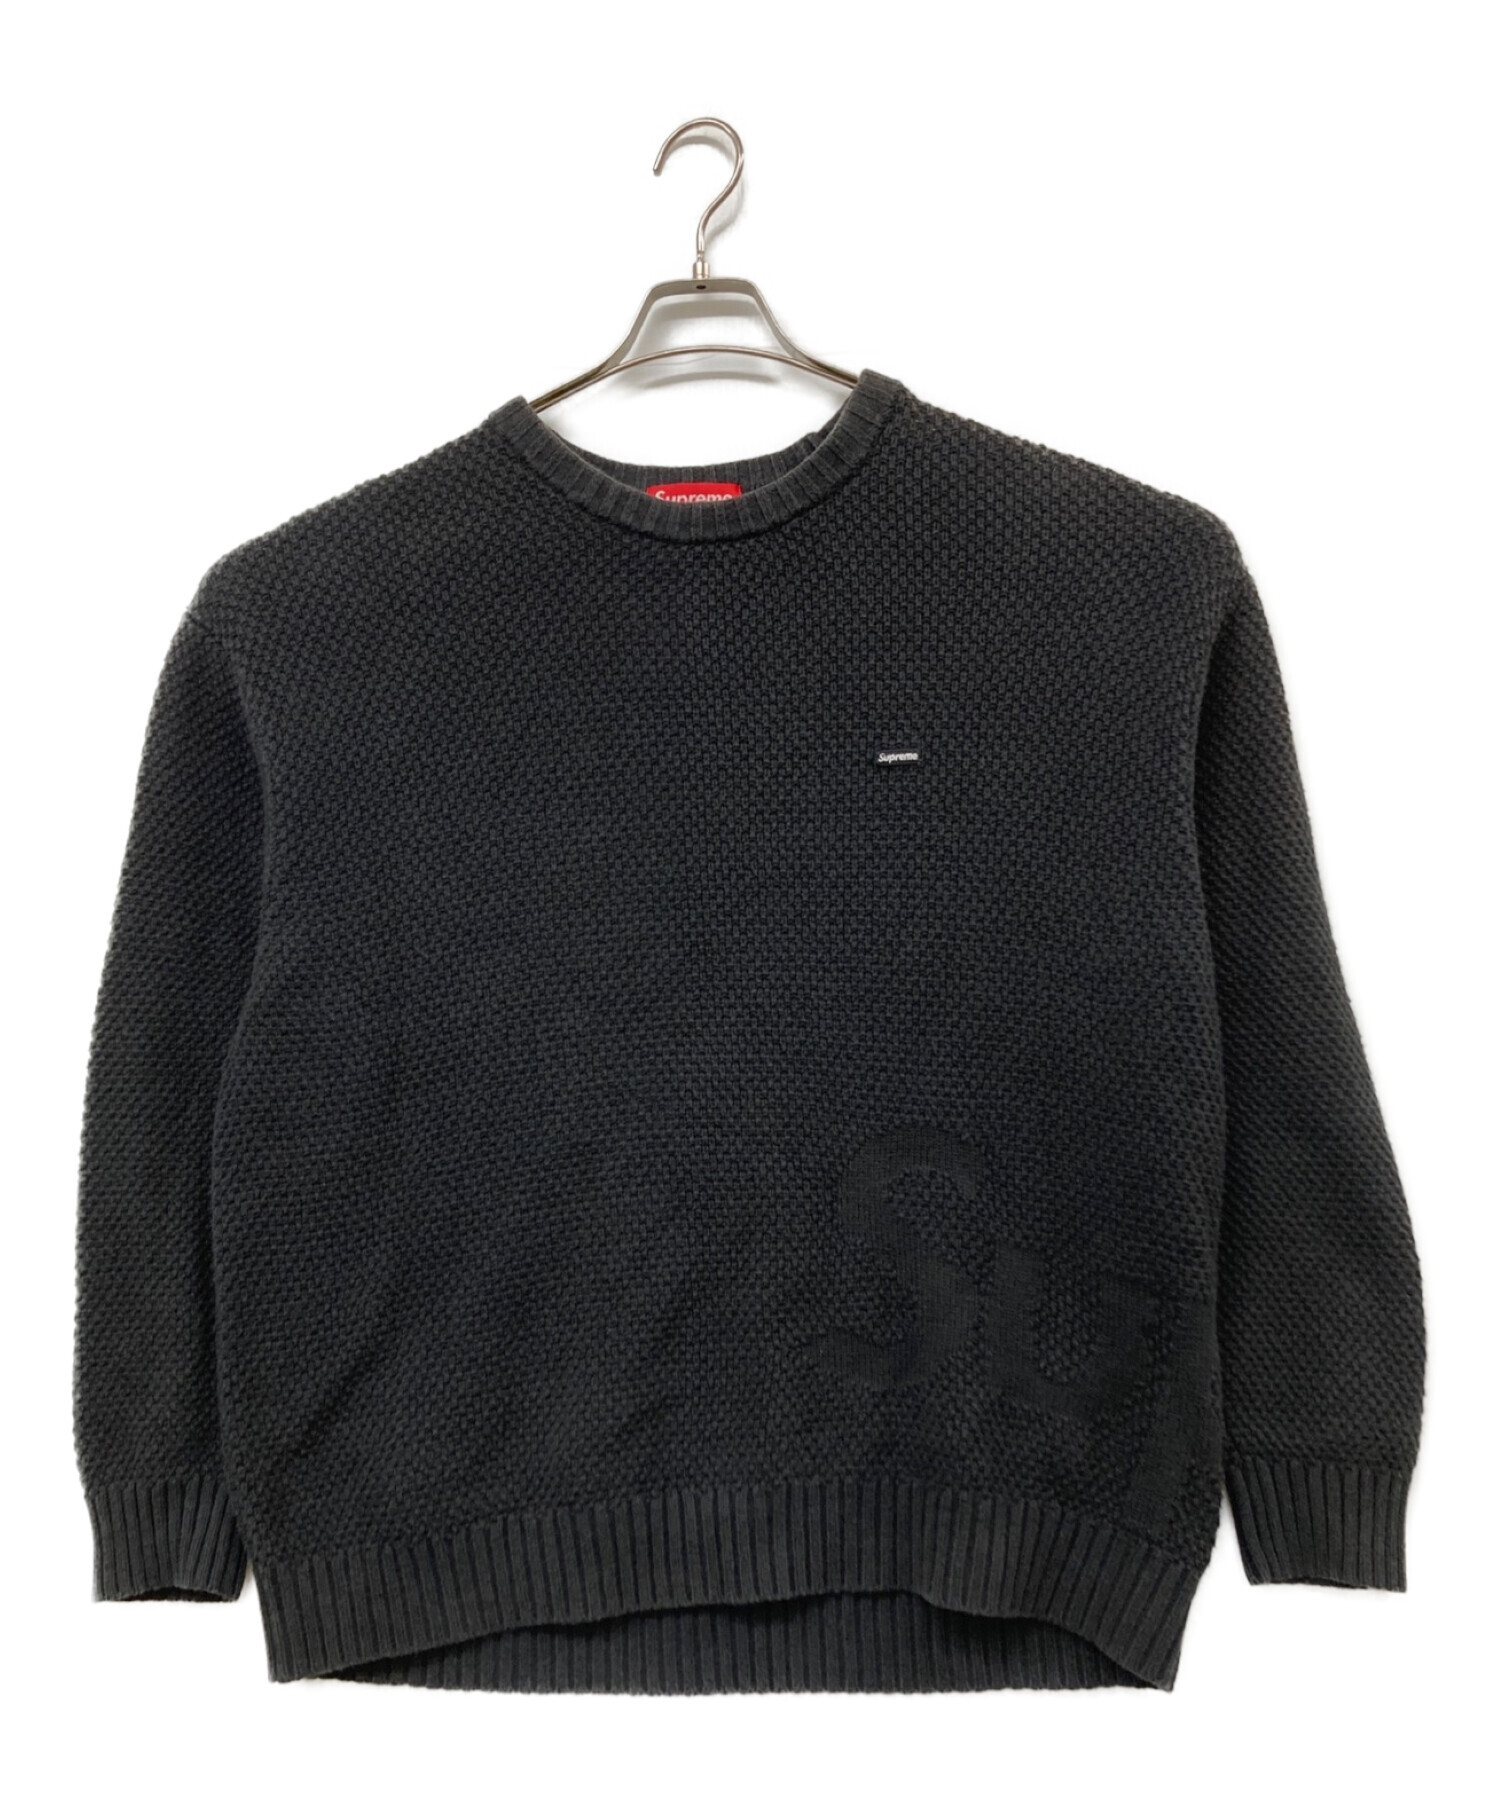 【XL】 Textured Small Box Sweater SUPREME